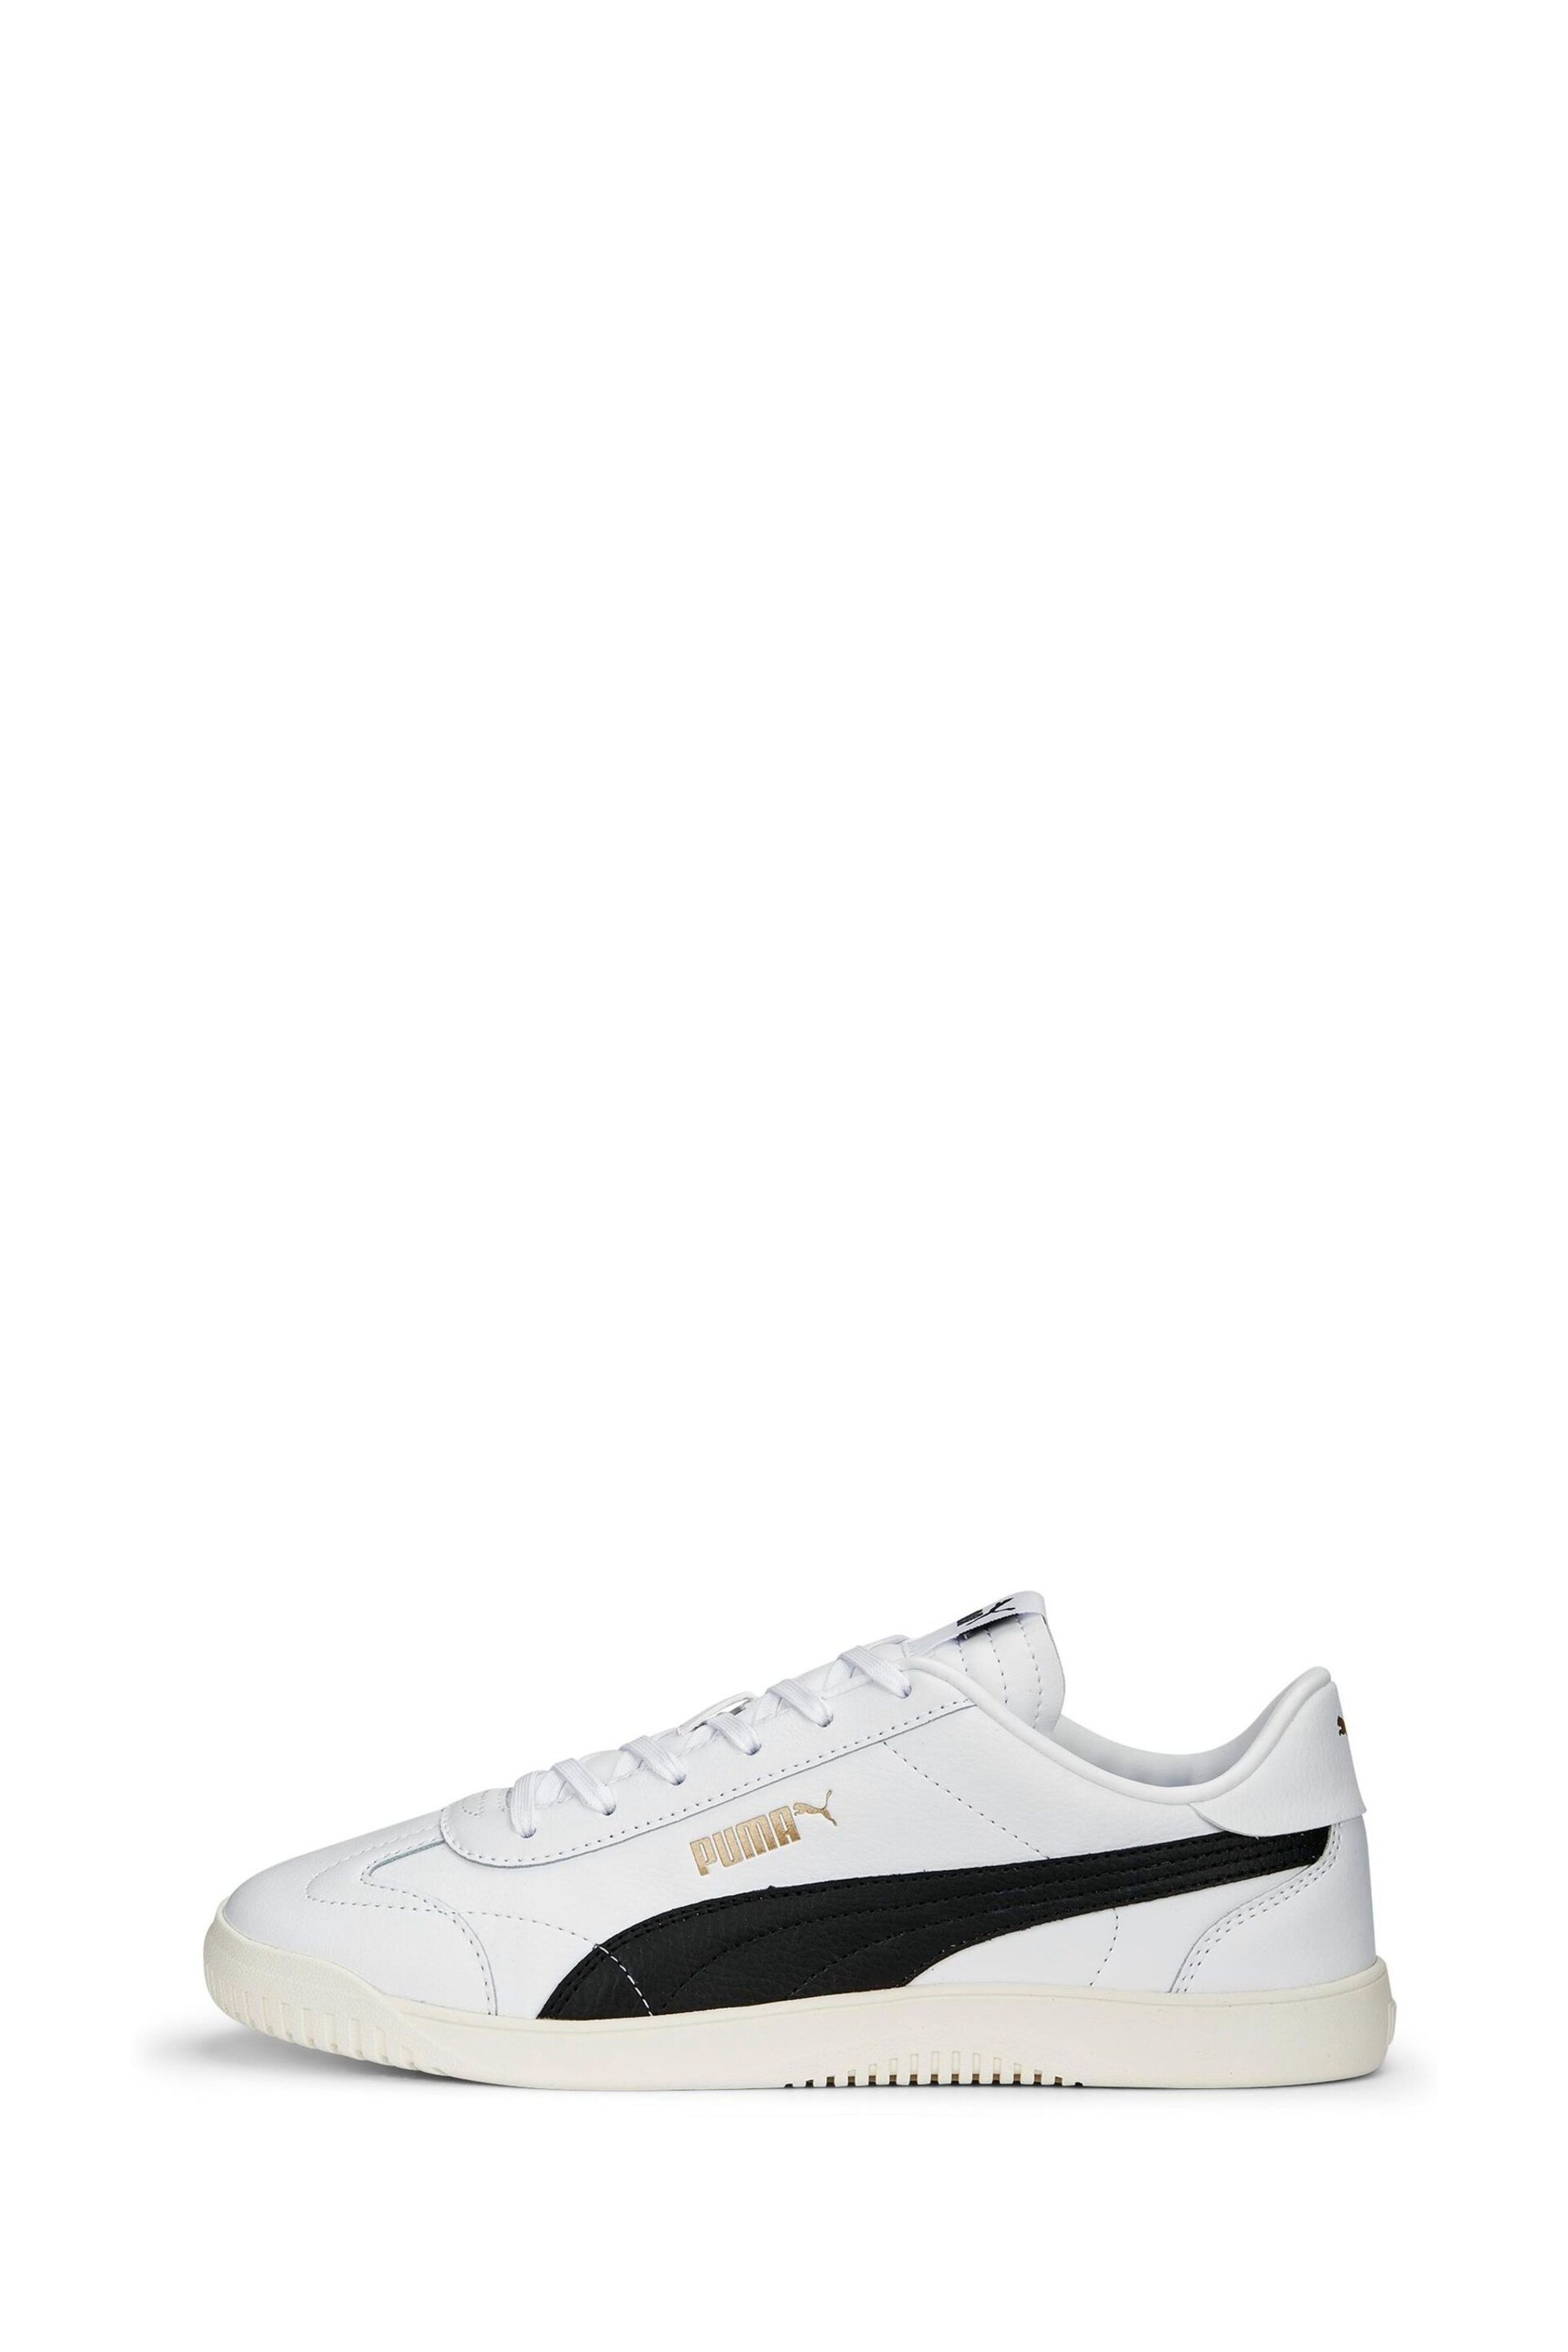 Puma White Mens Club 5v5 Sneakers - Image 2 of 5